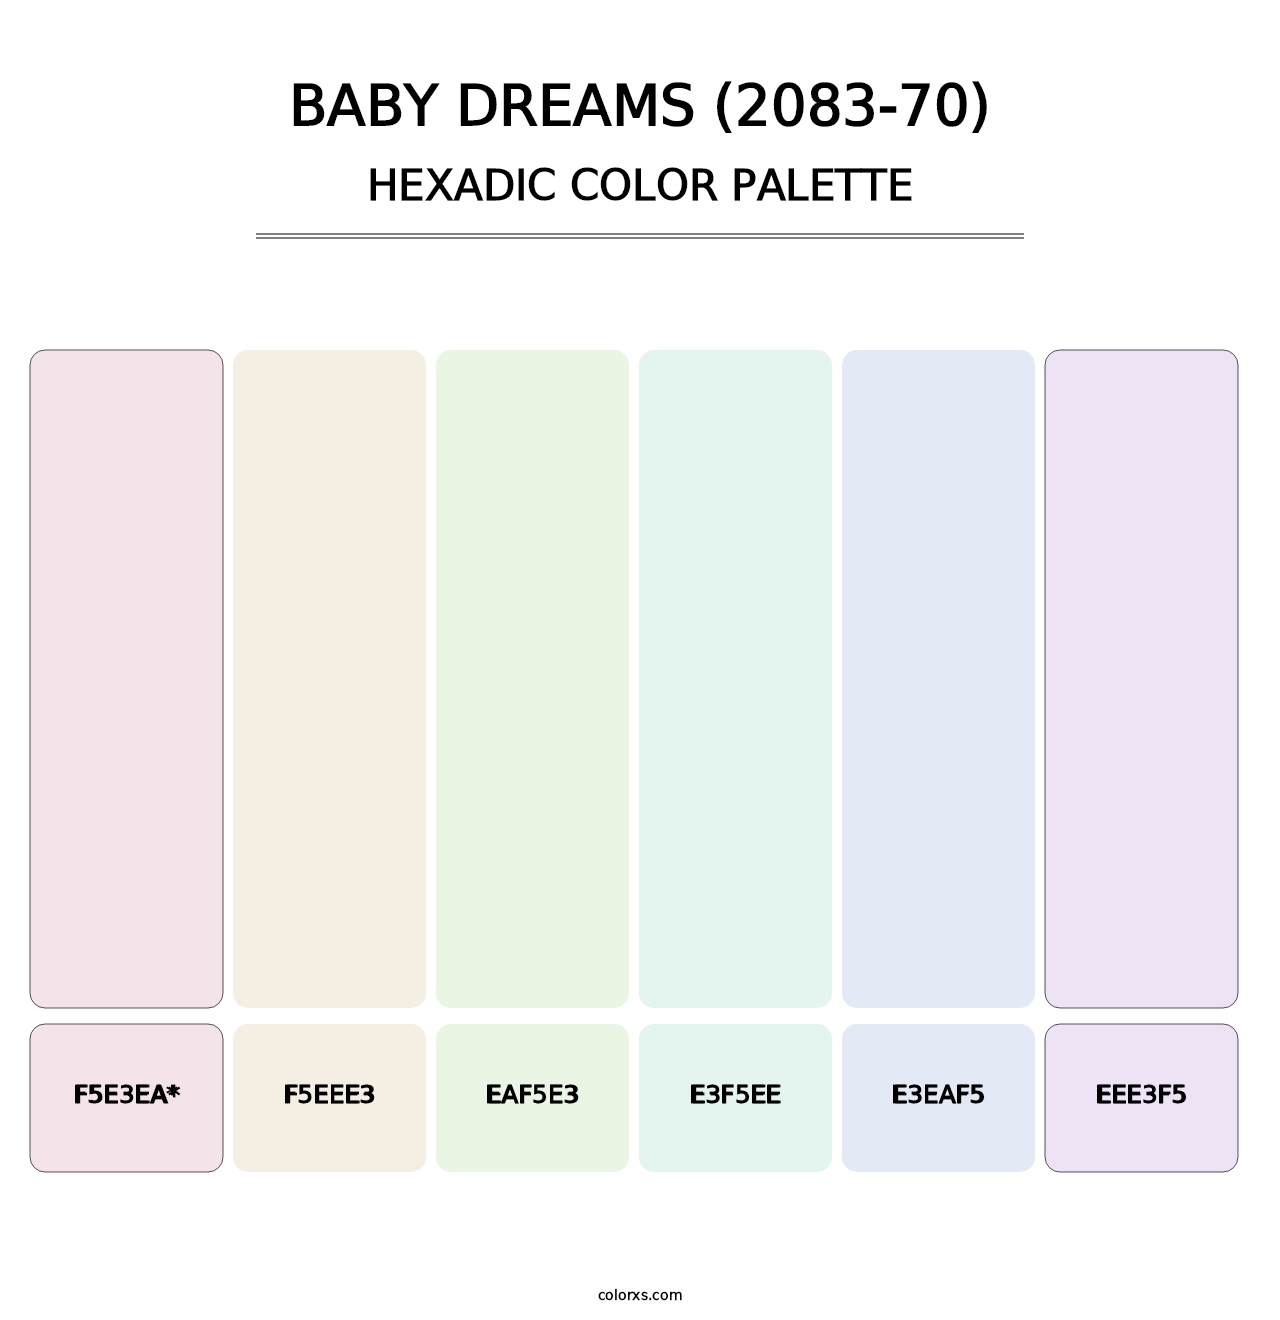 Baby Dreams (2083-70) - Hexadic Color Palette